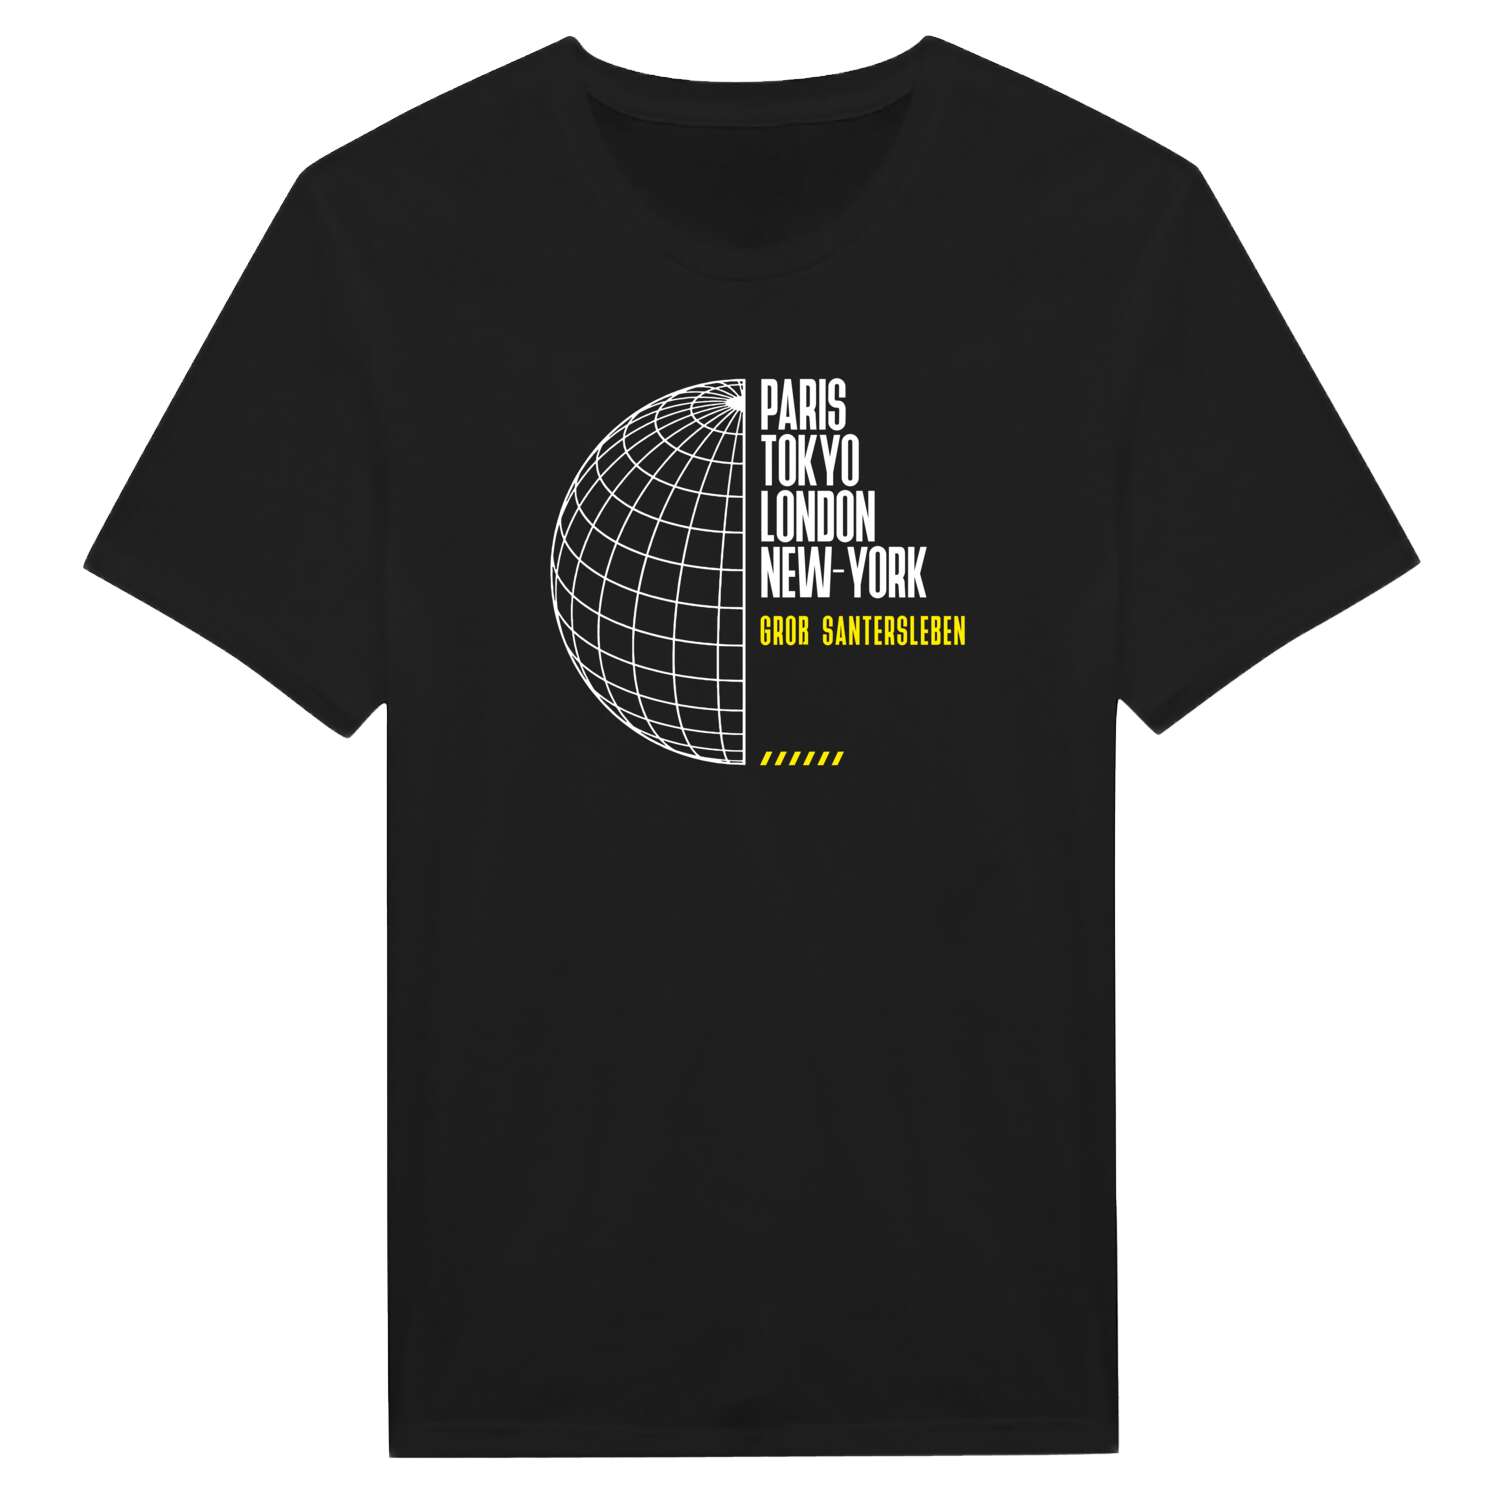 Groß Santersleben T-Shirt »Paris Tokyo London«